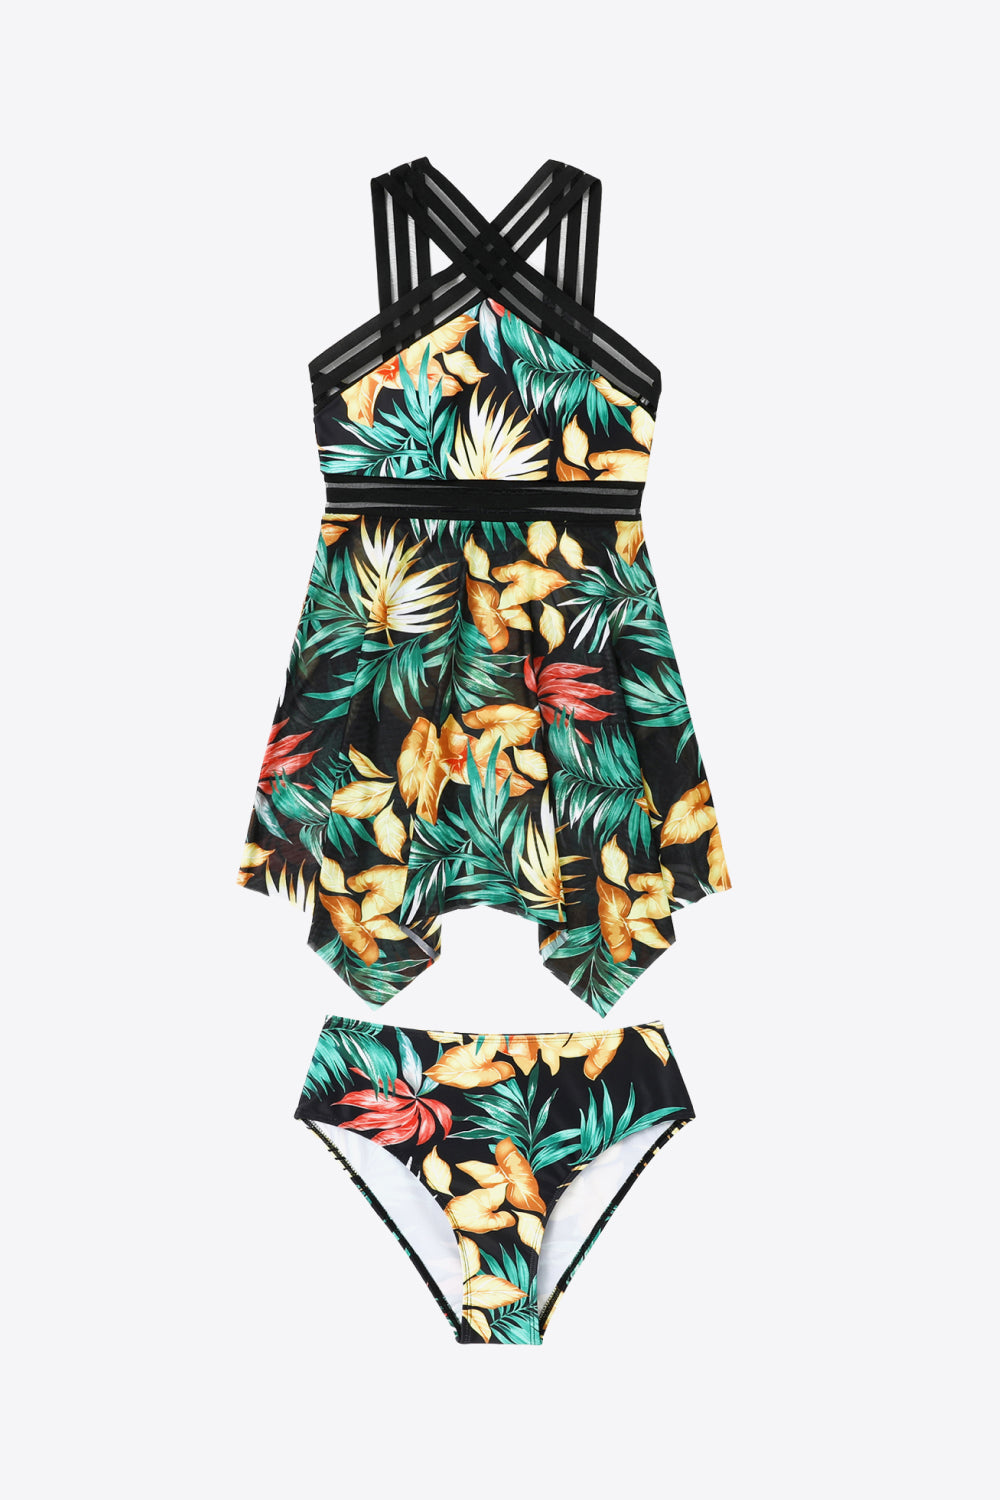 Women's Printed Swim Dress and Bottoms Swimsuit Set